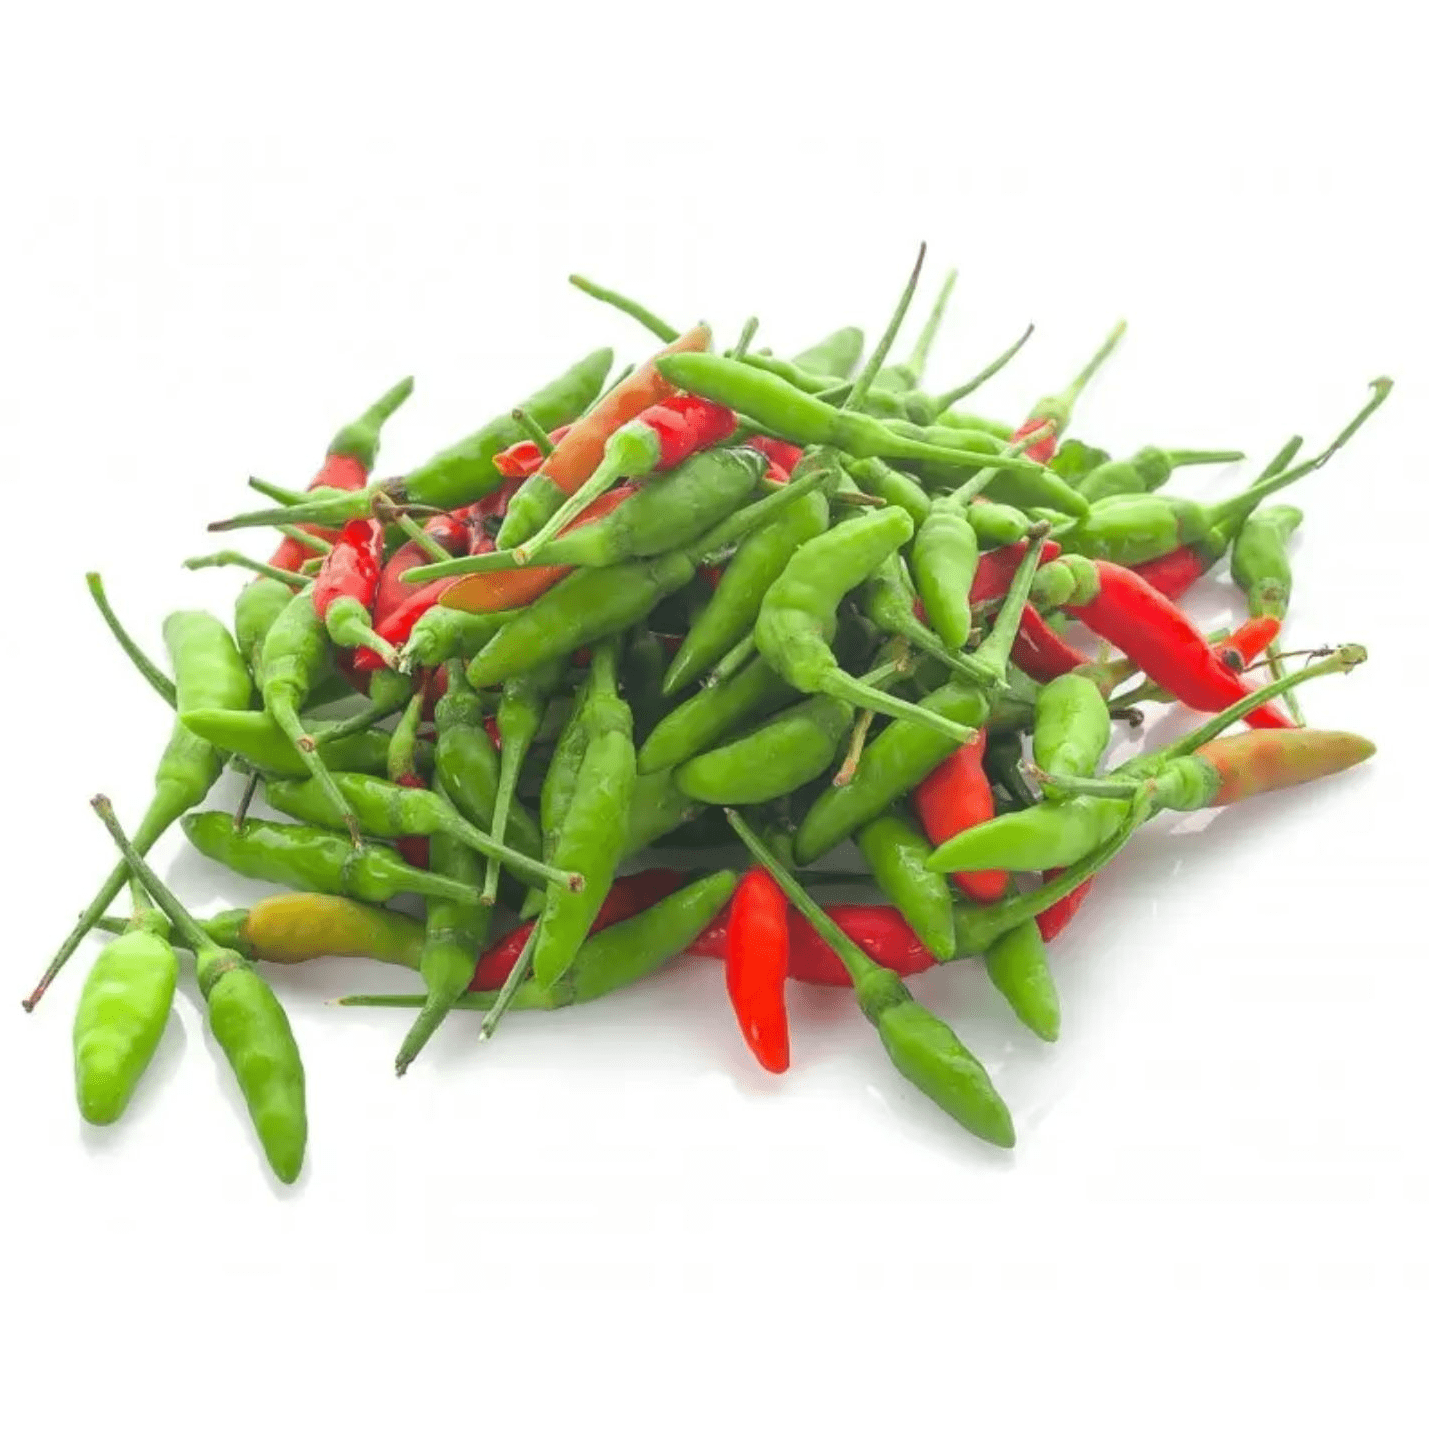 Hot Pepper - Thai Chili Bird's Eye